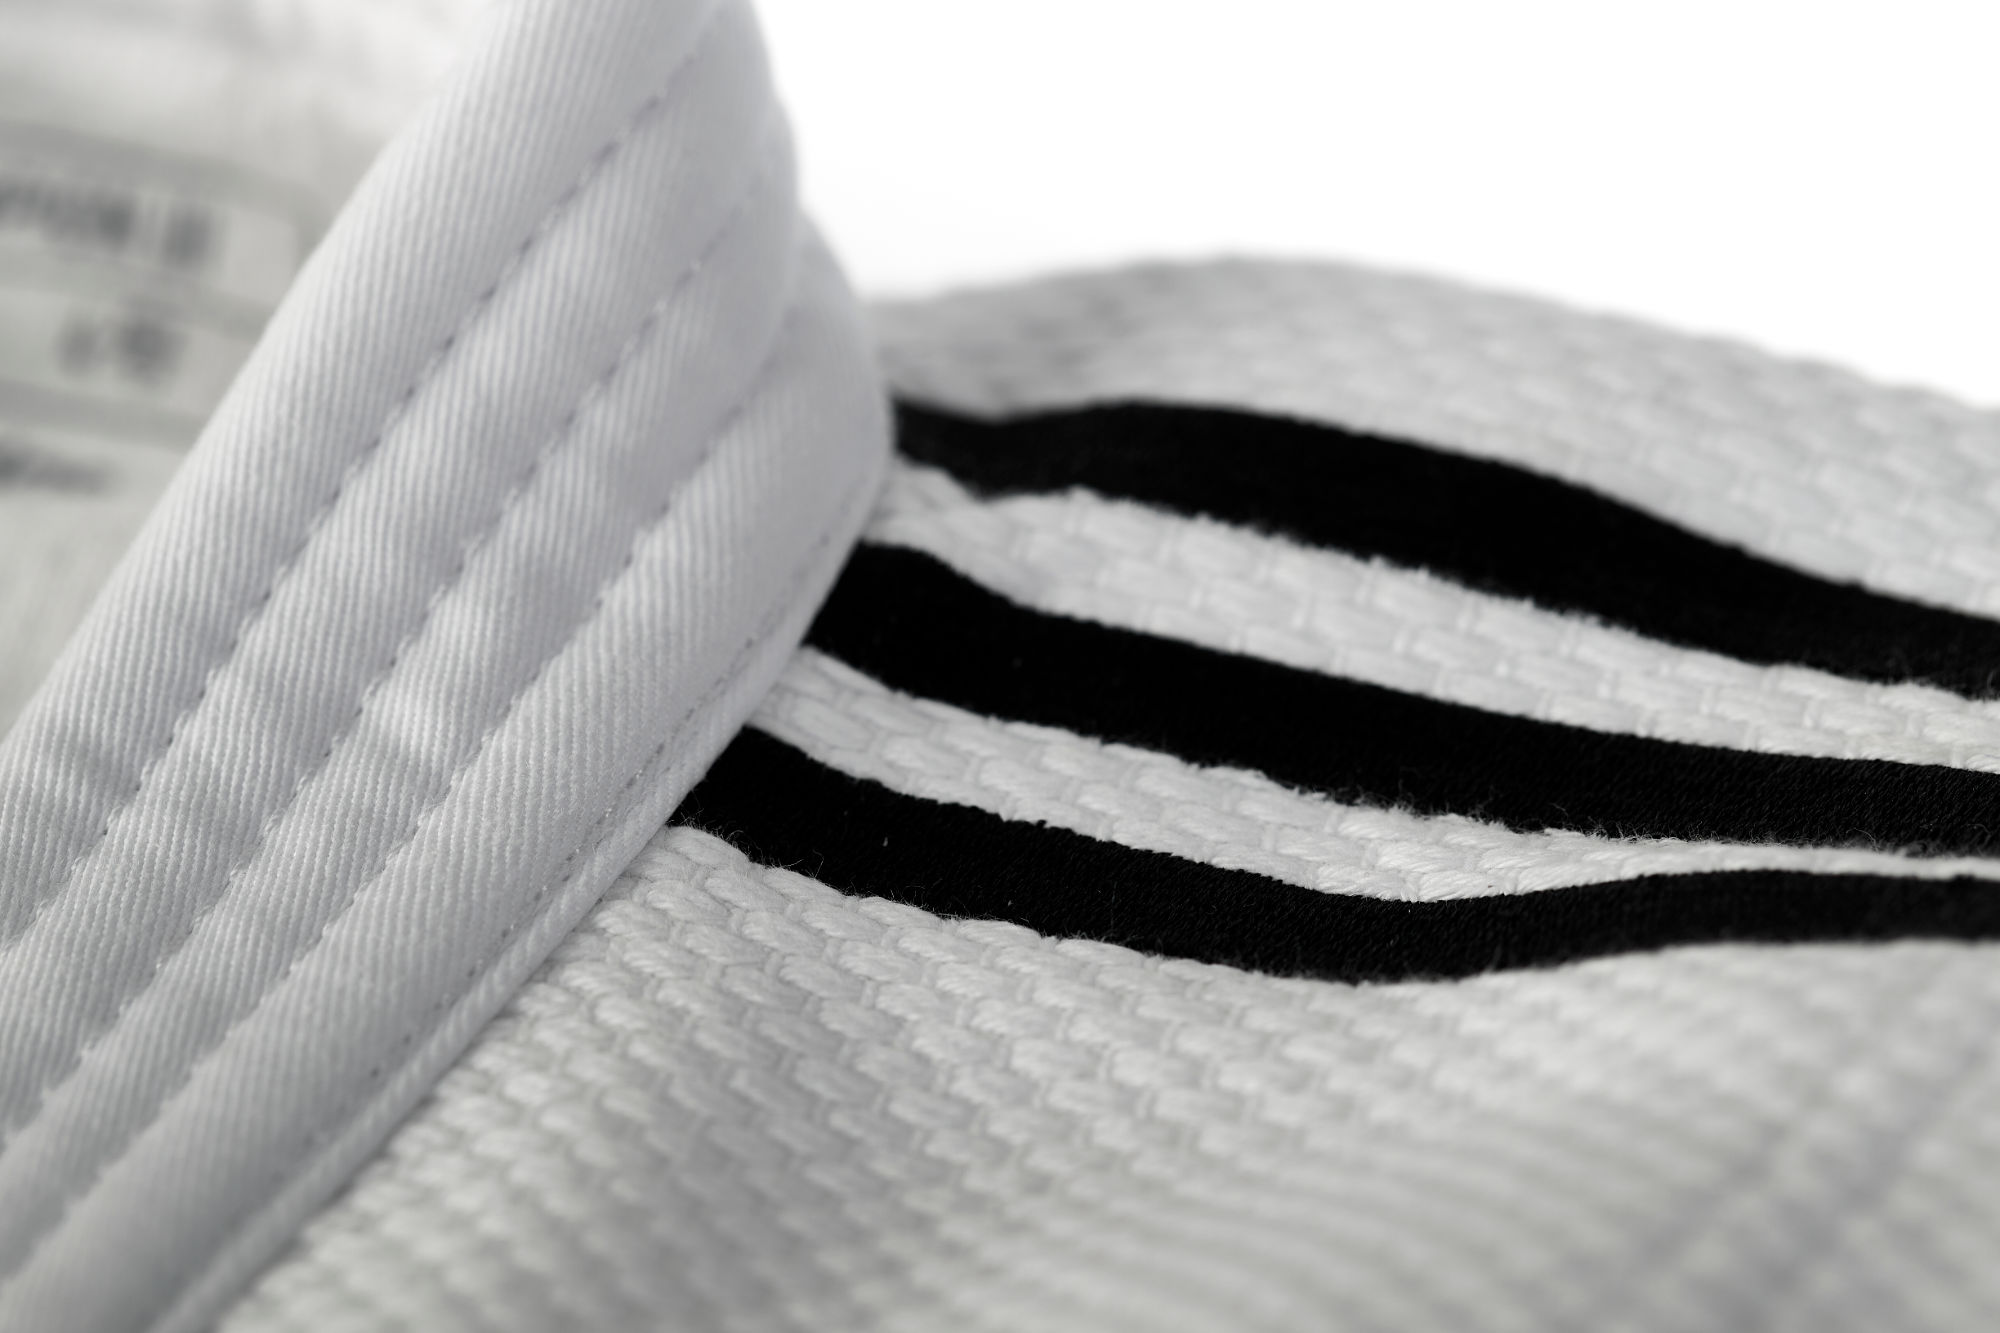 adidas judo jacket Champion III-2 JIJF, white/black stripes regular cut